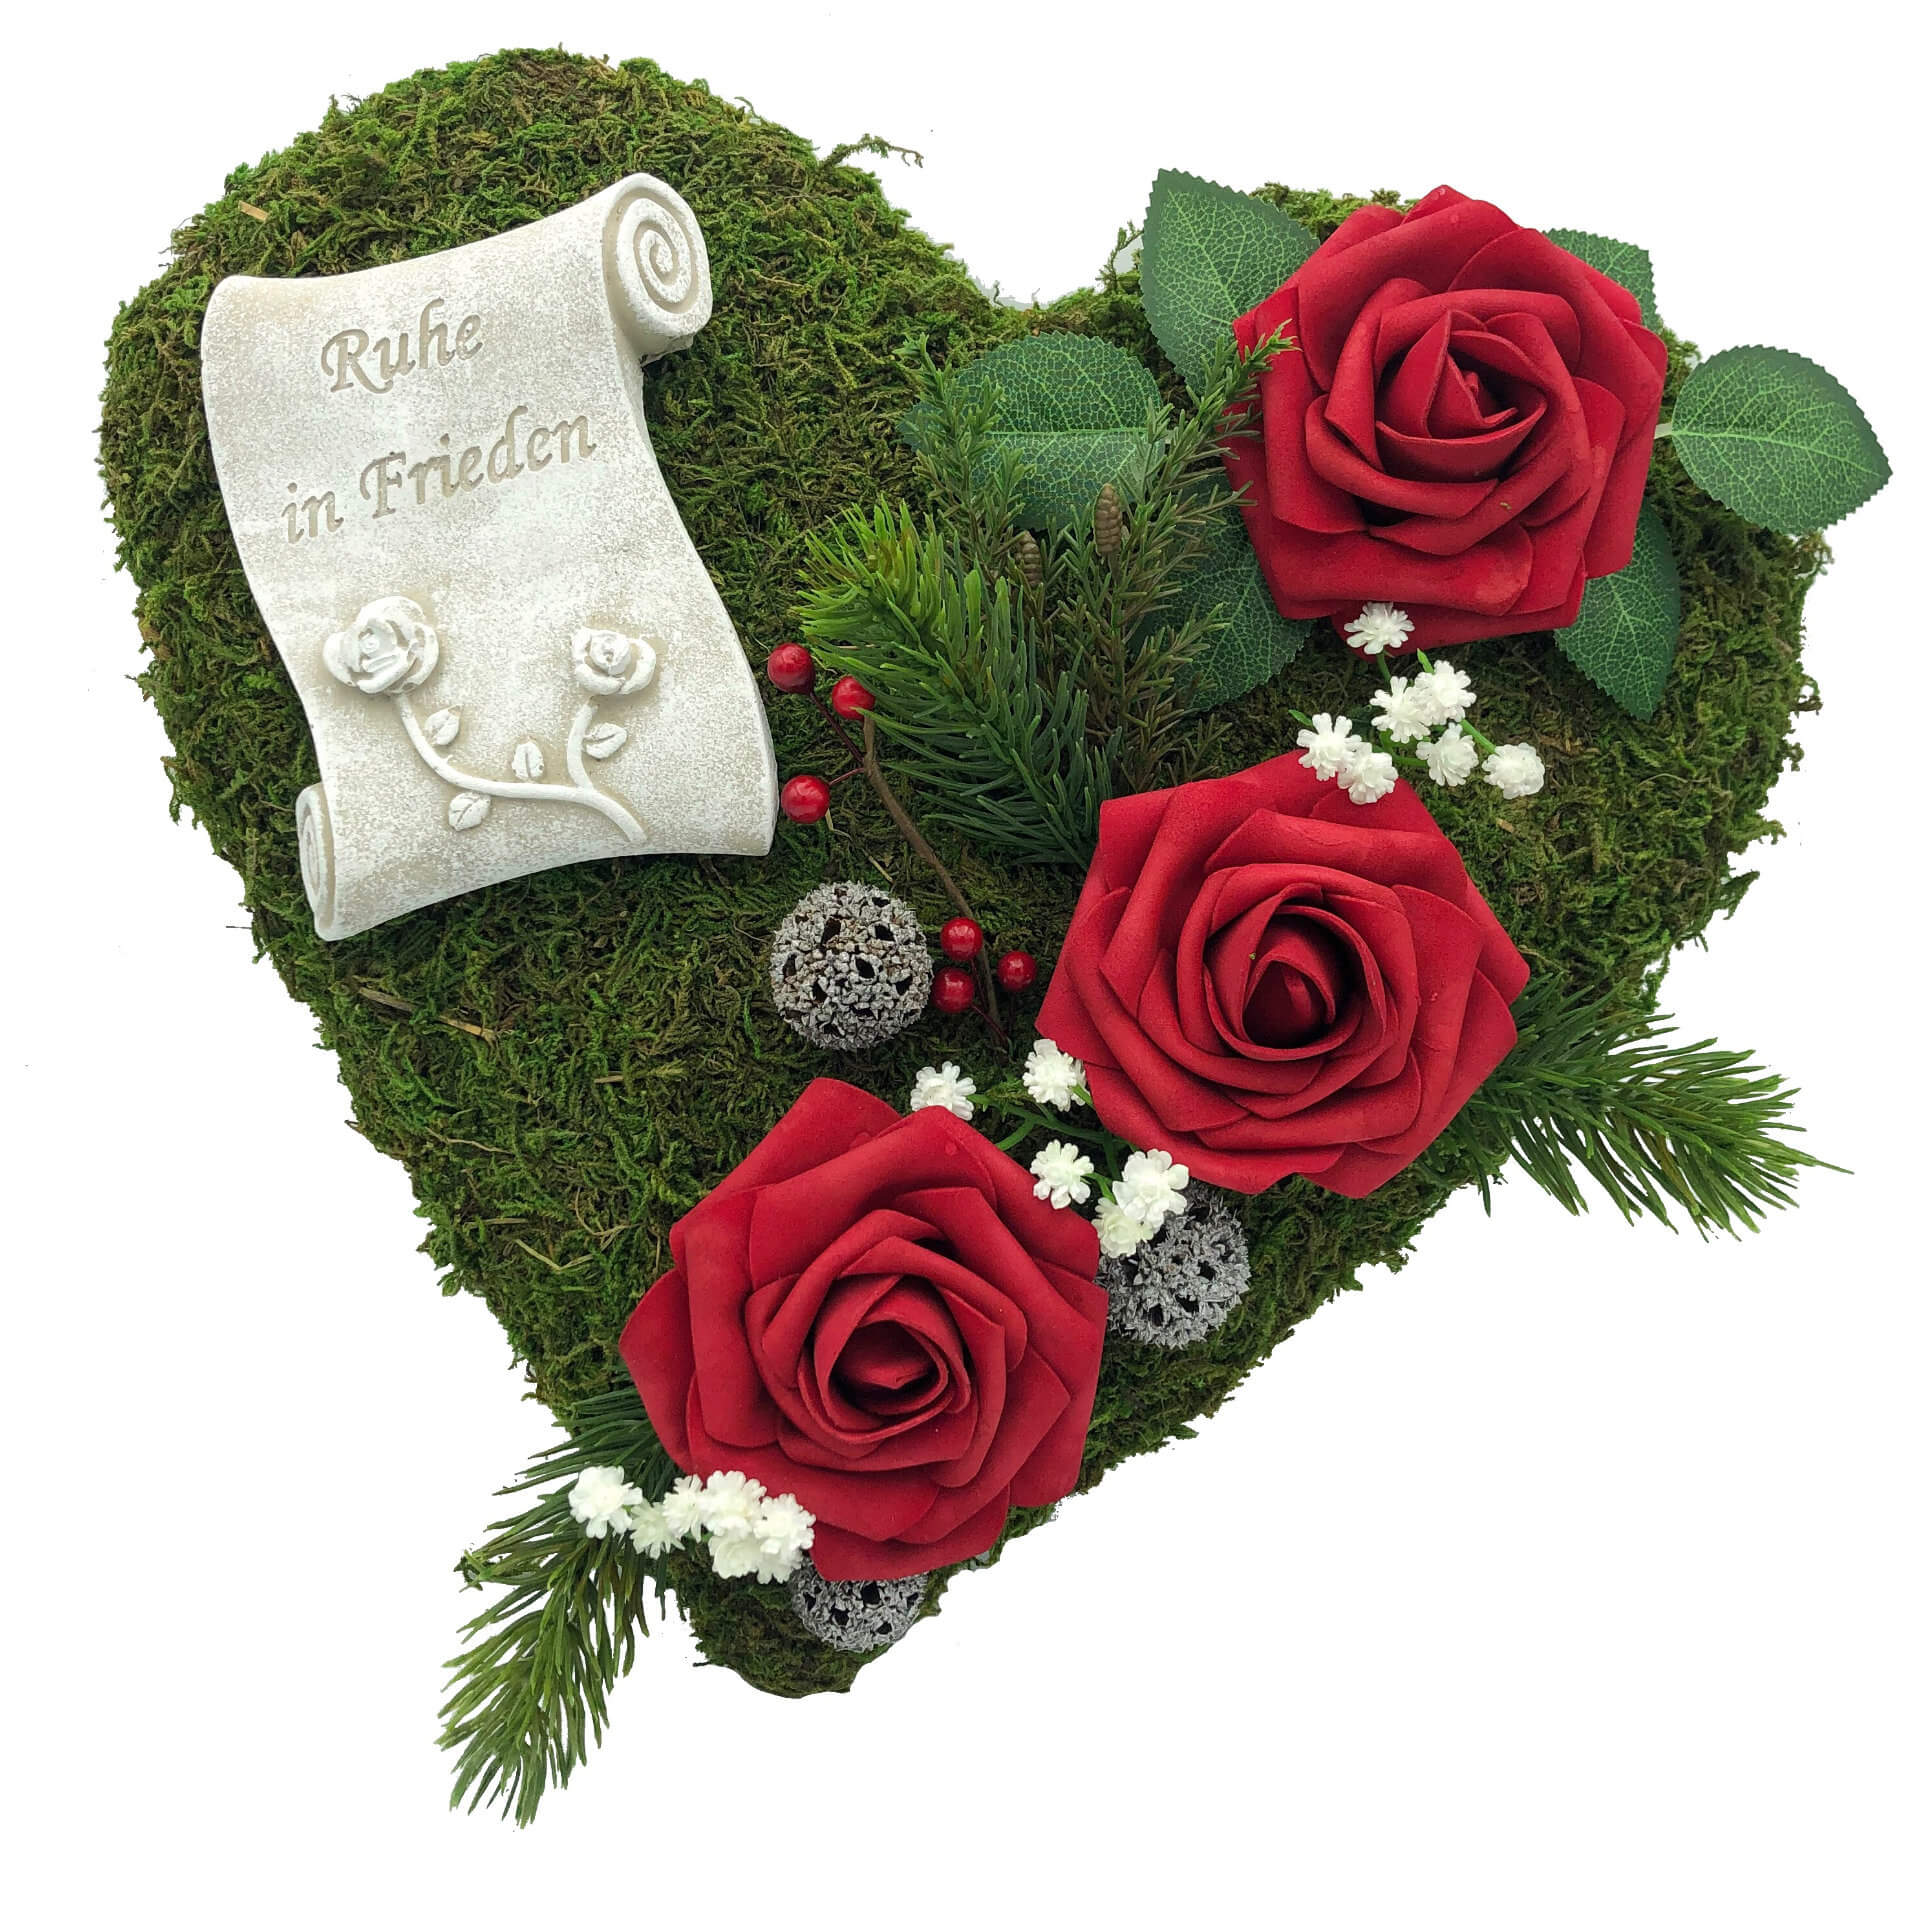 Grabgesteck "Ruhe in Frieden" 30cm 3 Rosen rot